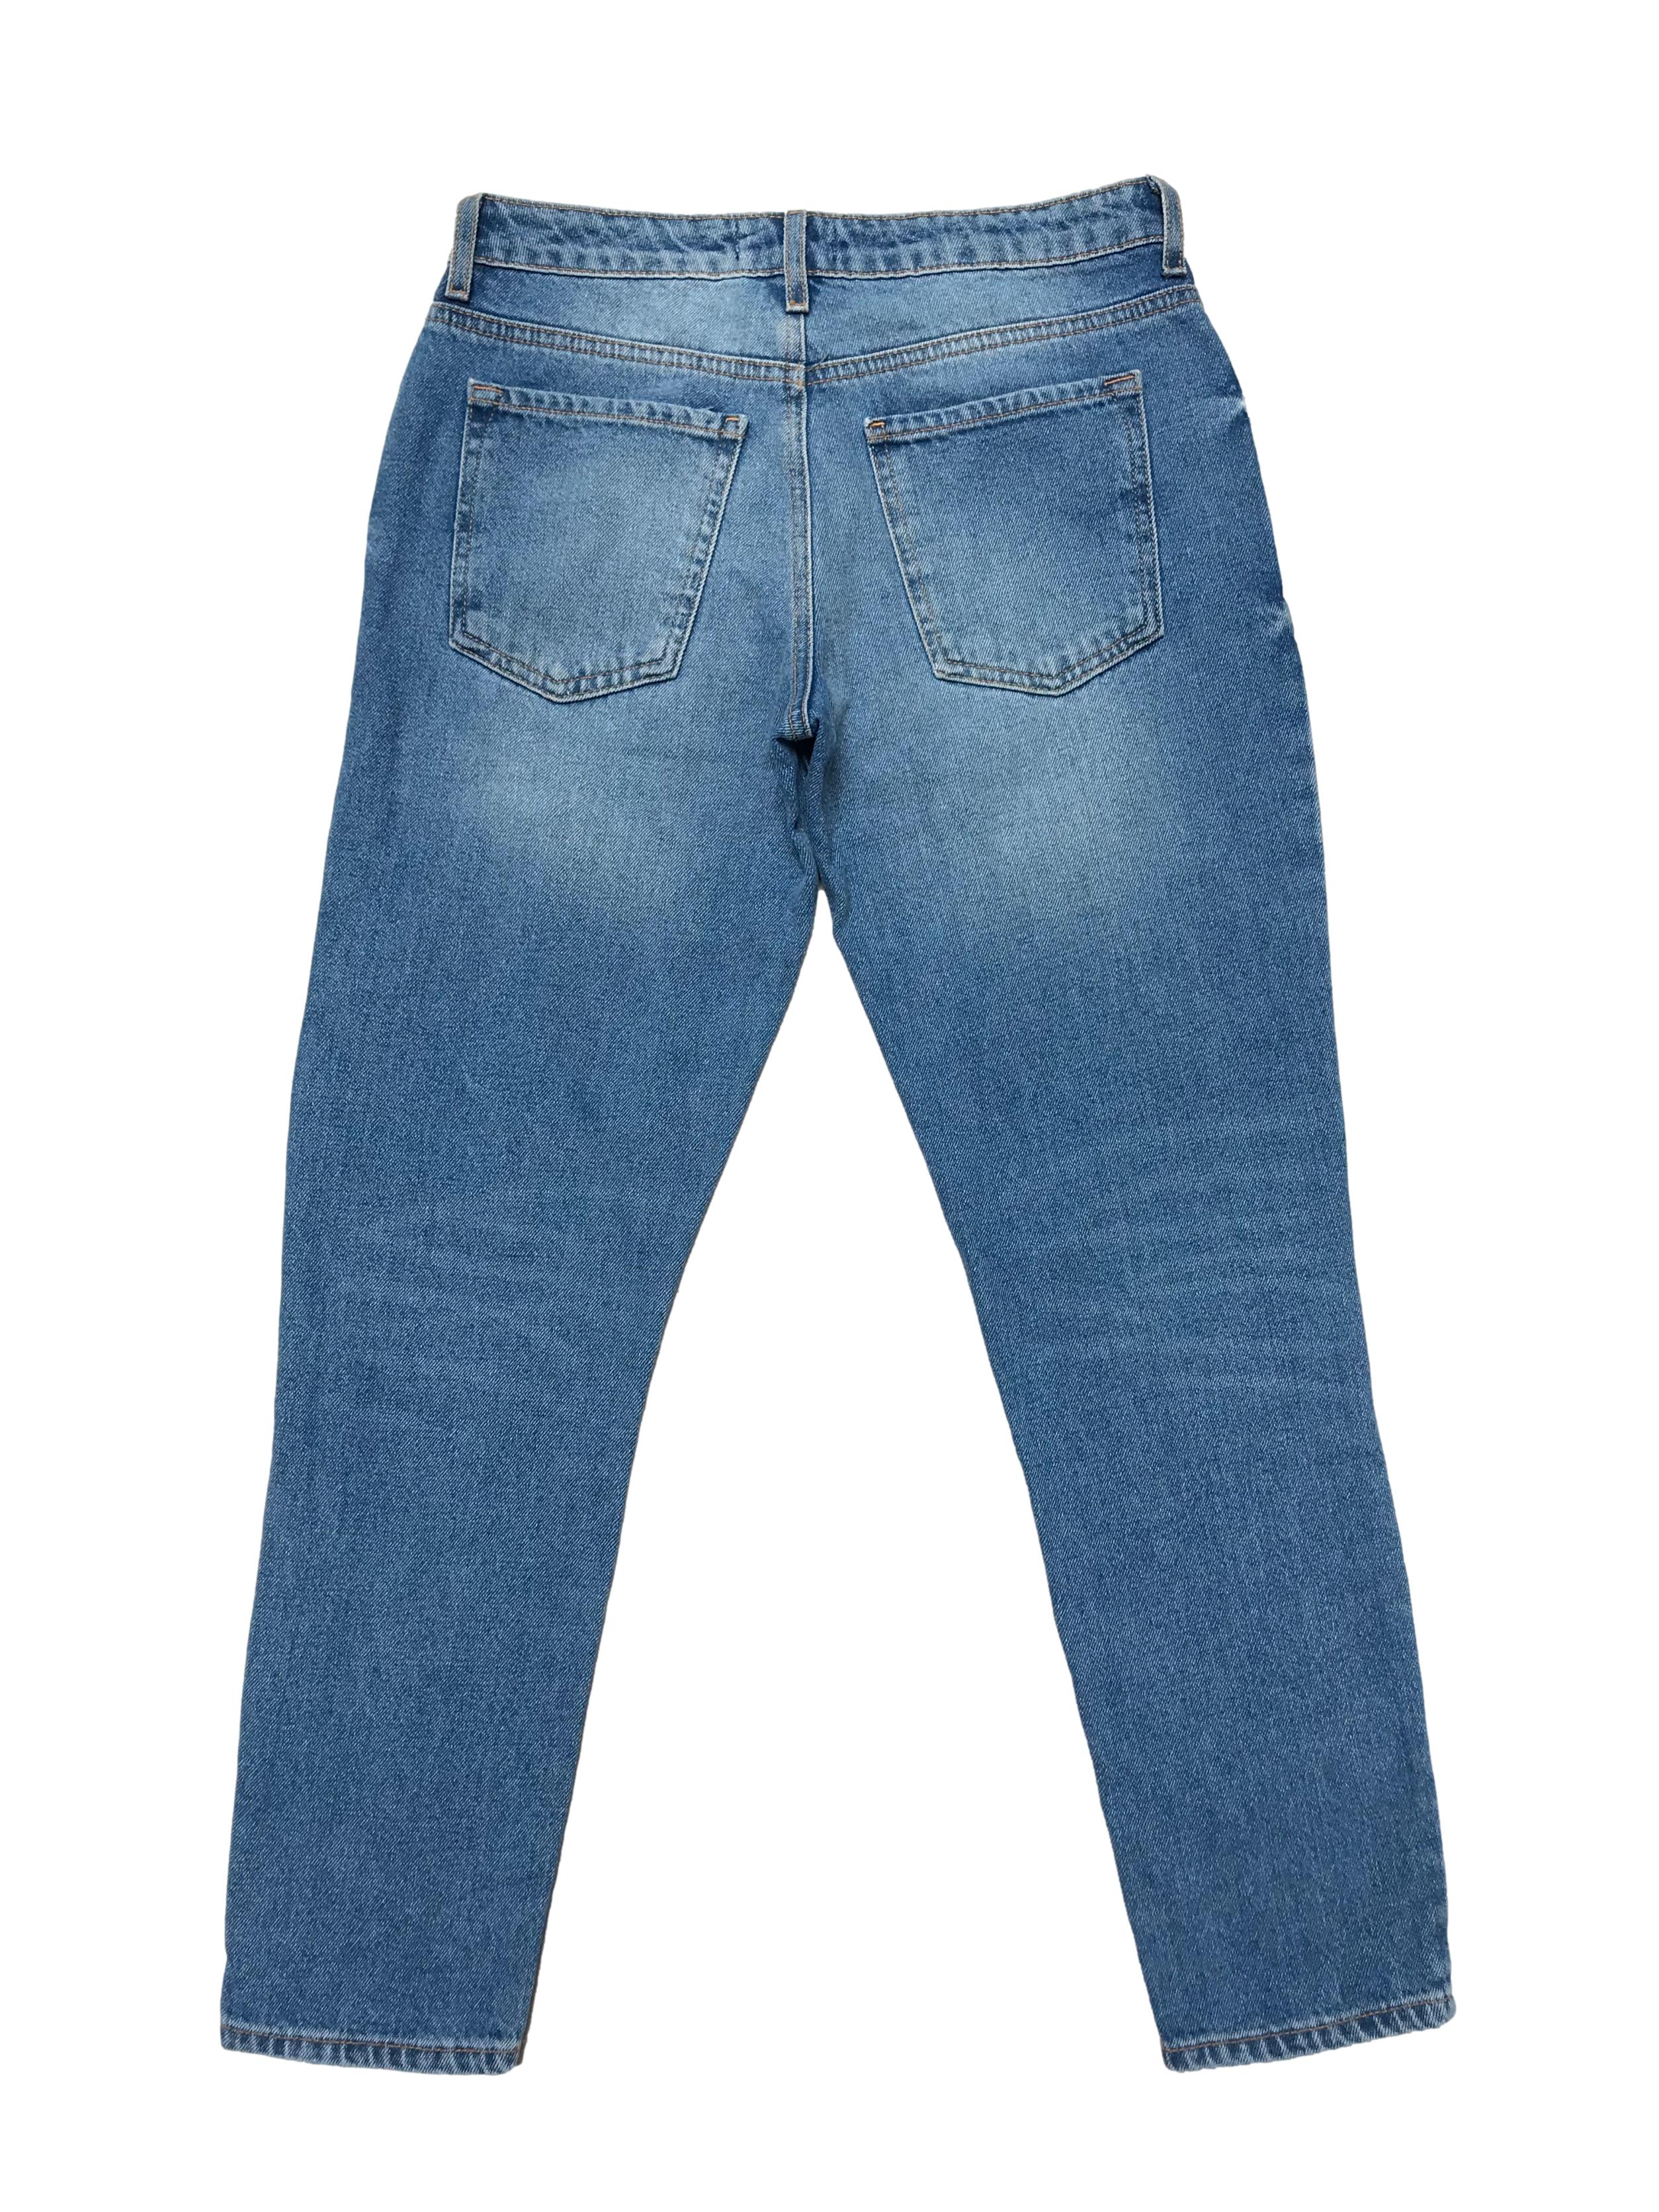 Destroyed jeans Forever21 denim rígido 1005 algodón, corte boyfriend. Pretina 74cm Largo 91cm